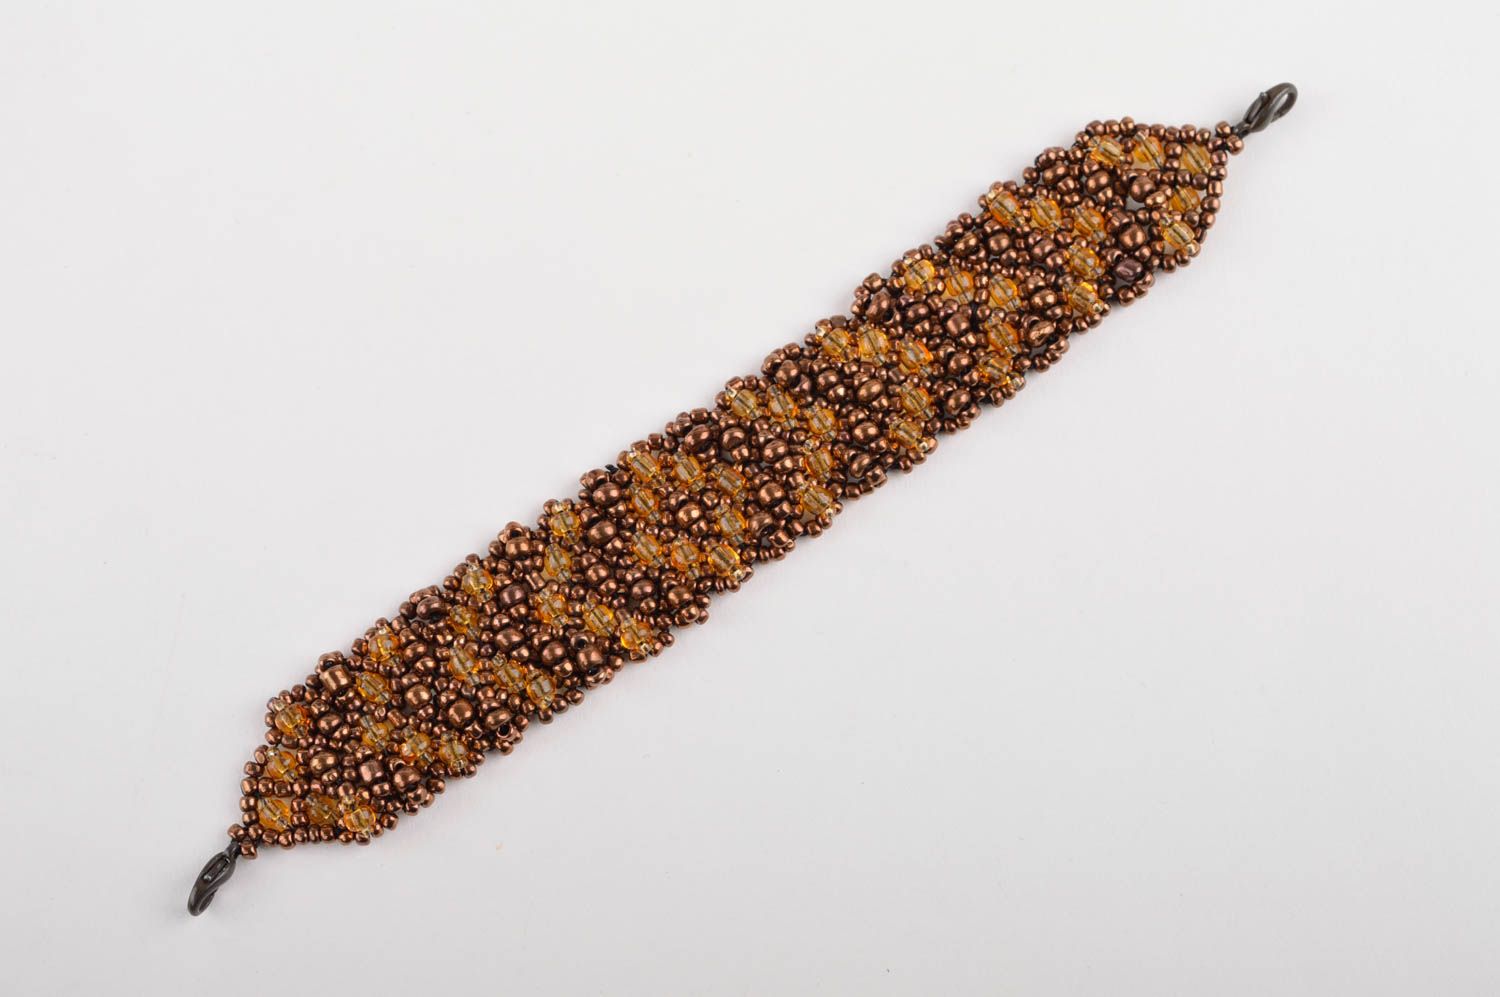 Handmade beaded necklace wrist bracelet designs costume jewelry set ideas photo 4